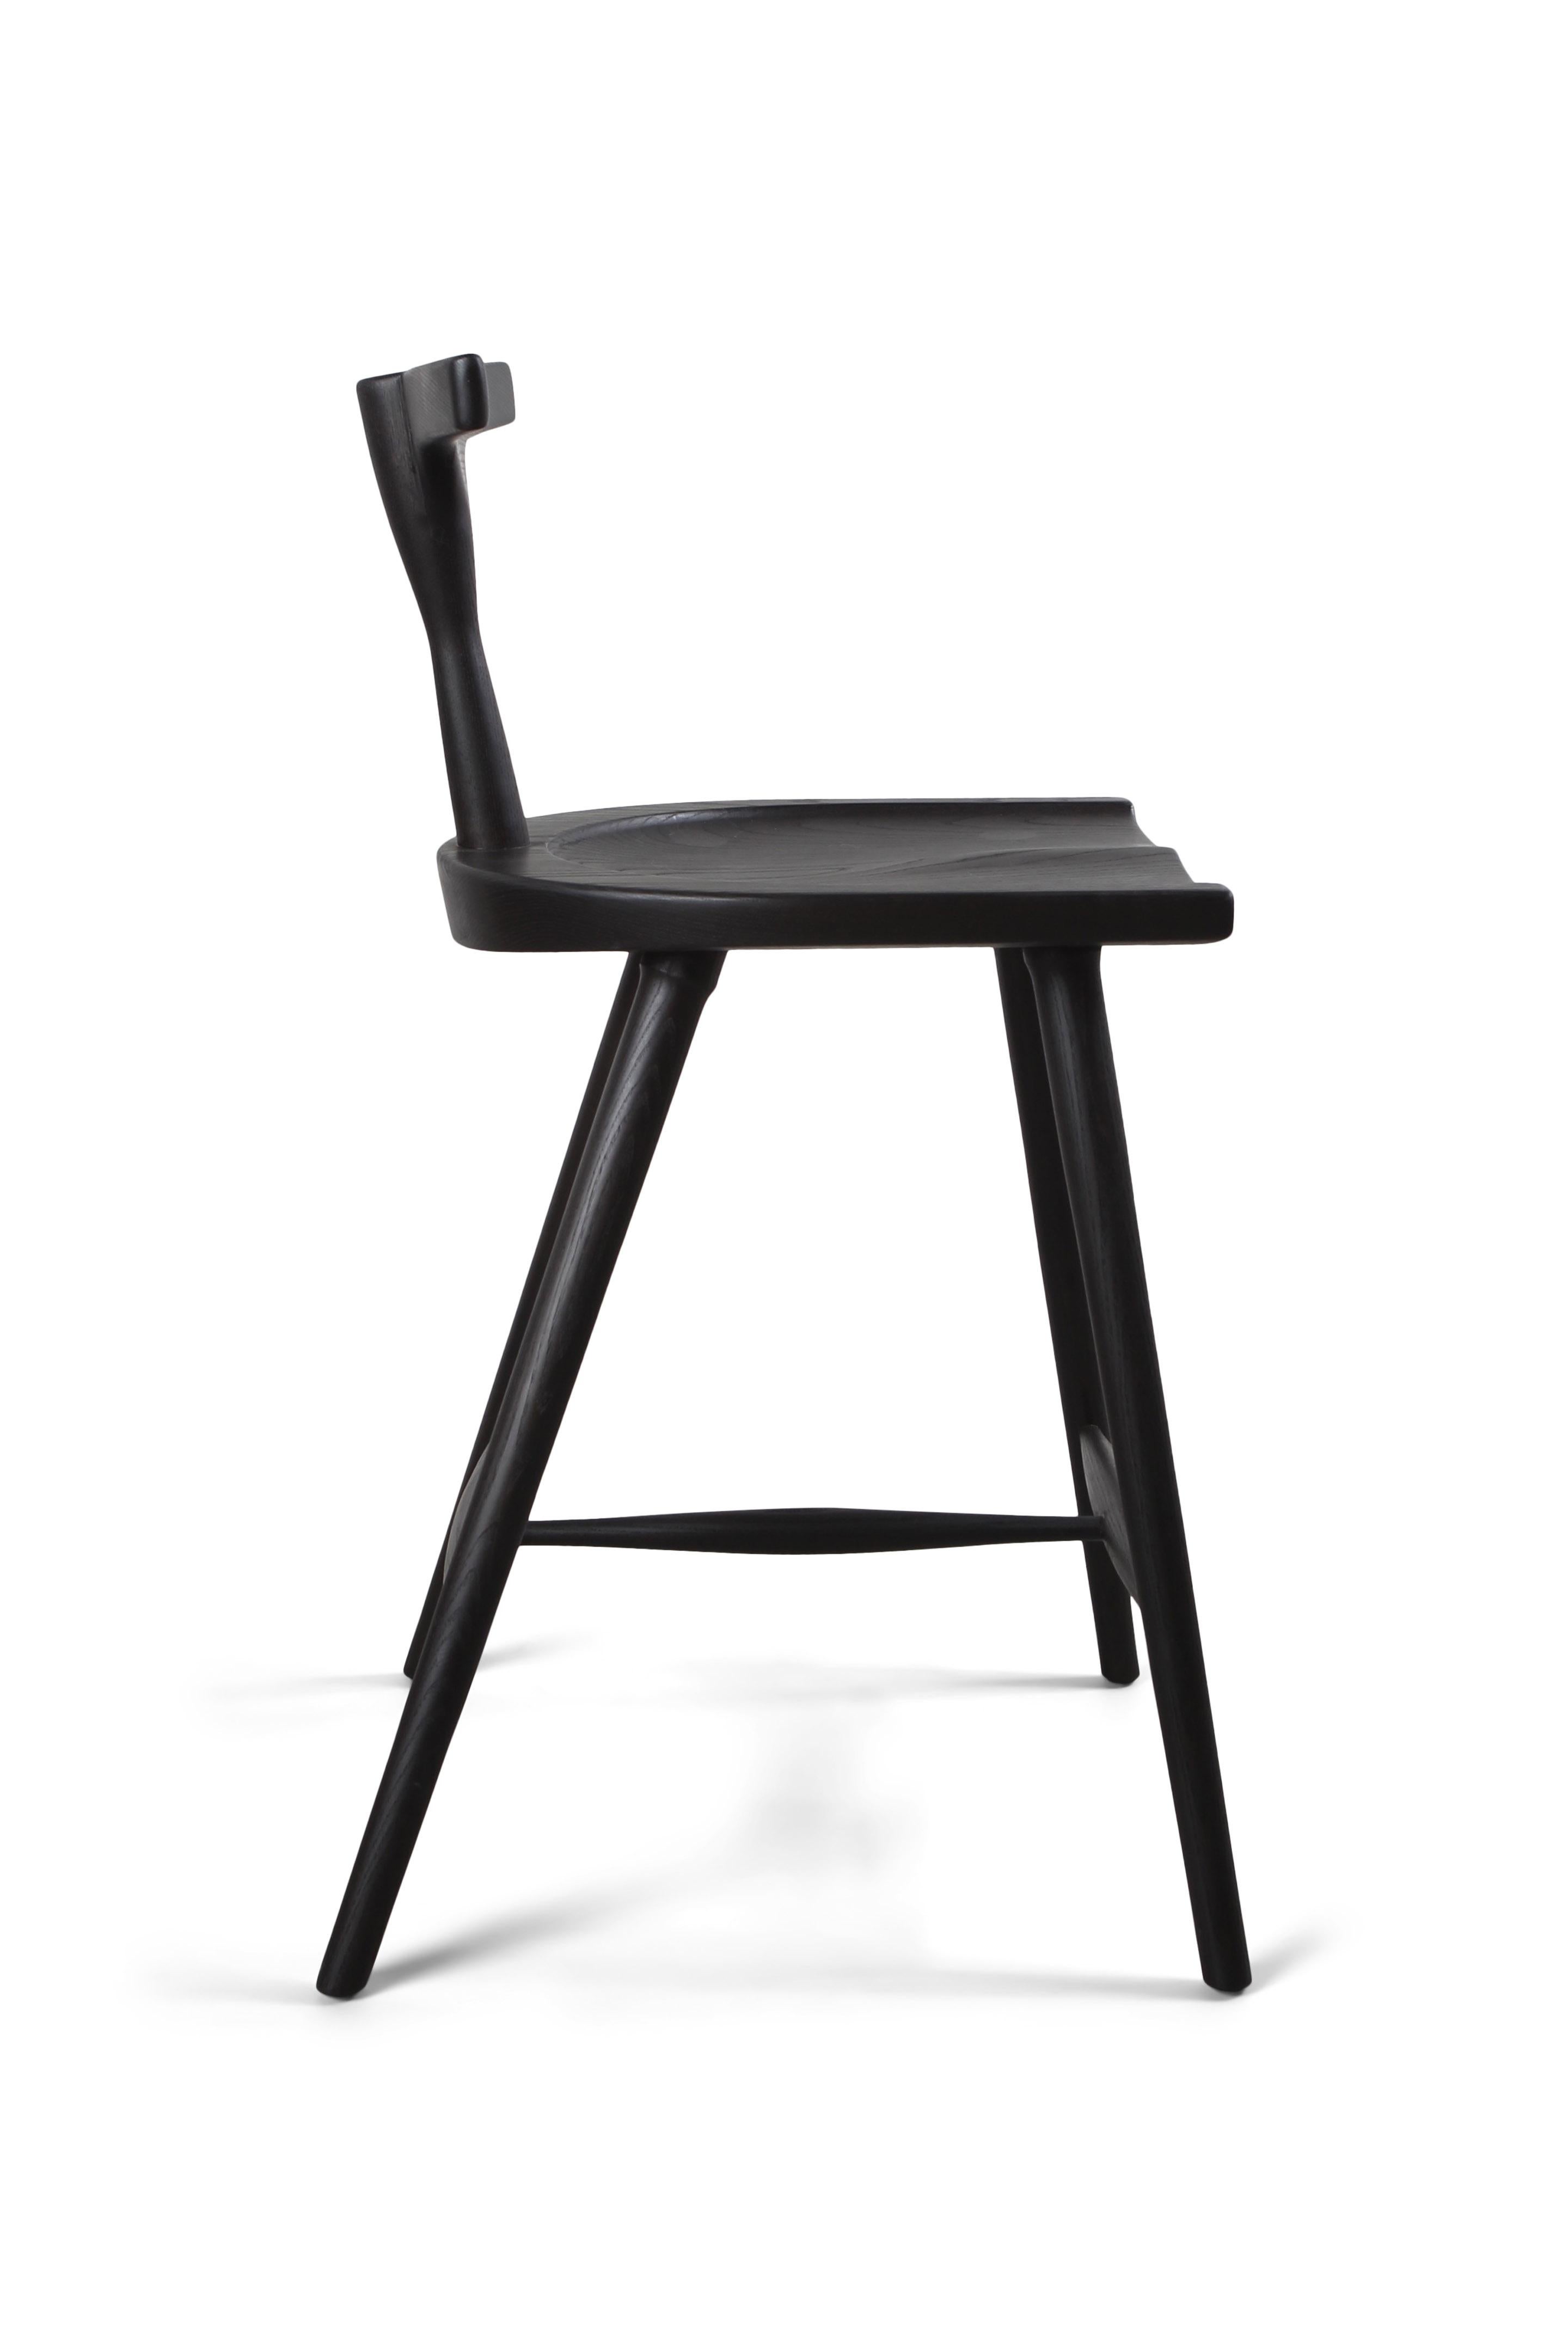 craftsman stools